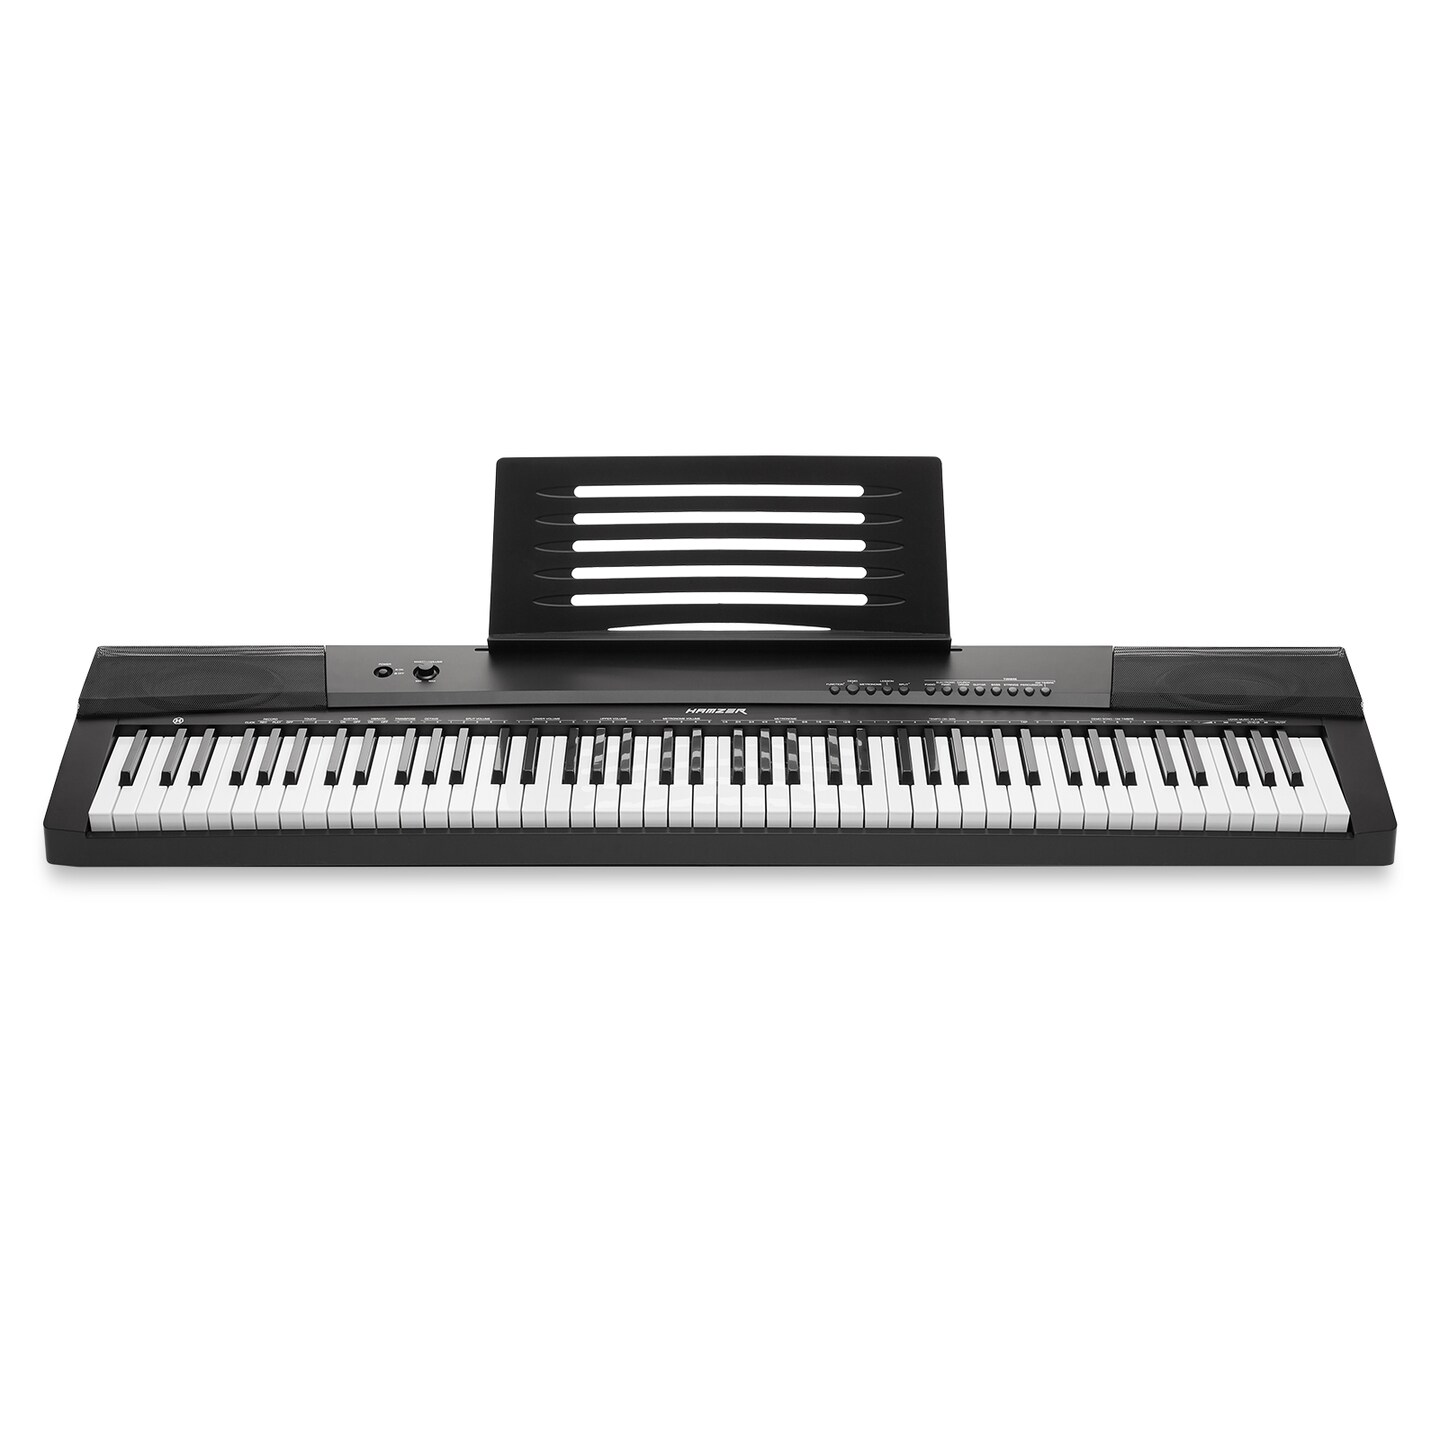 Hamzer 88-Key Electronic Keyboard Portable Digital Music Piano with Touch Sensitive Keys